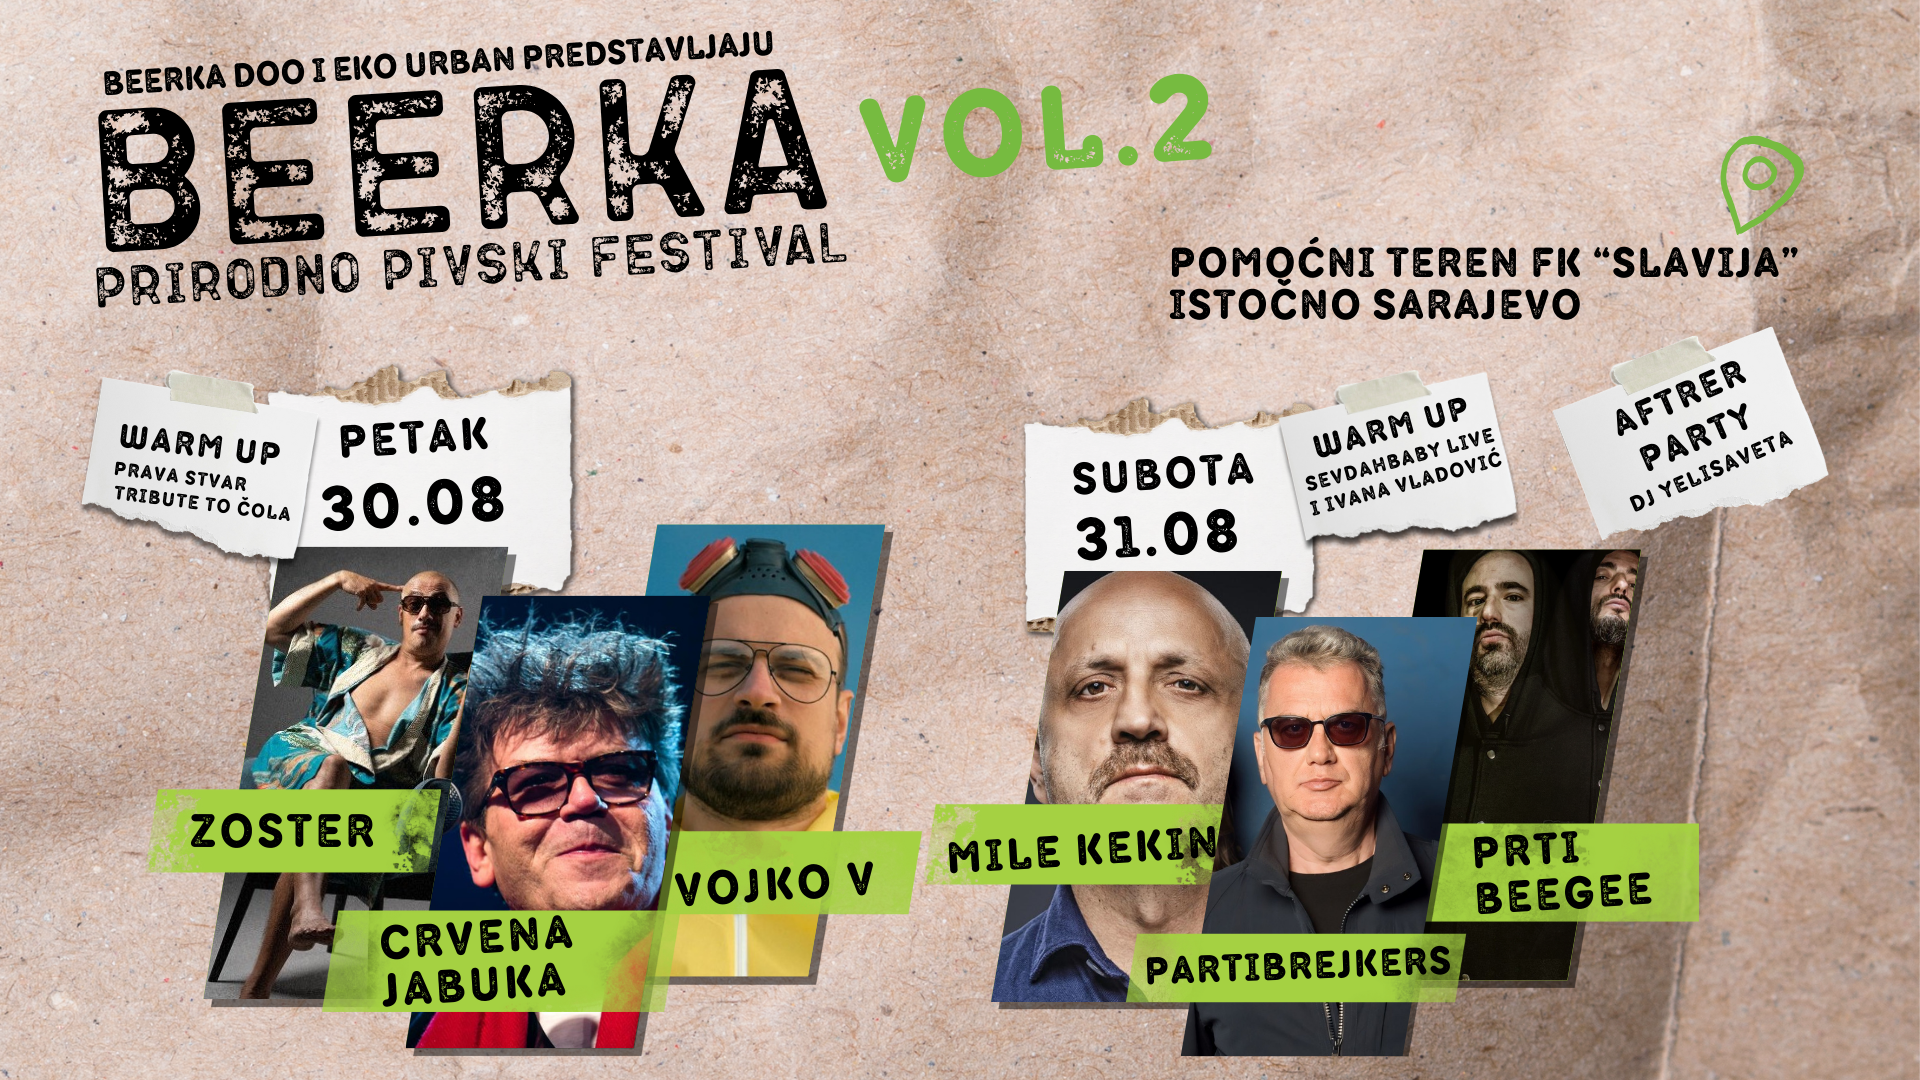 Beerka festival